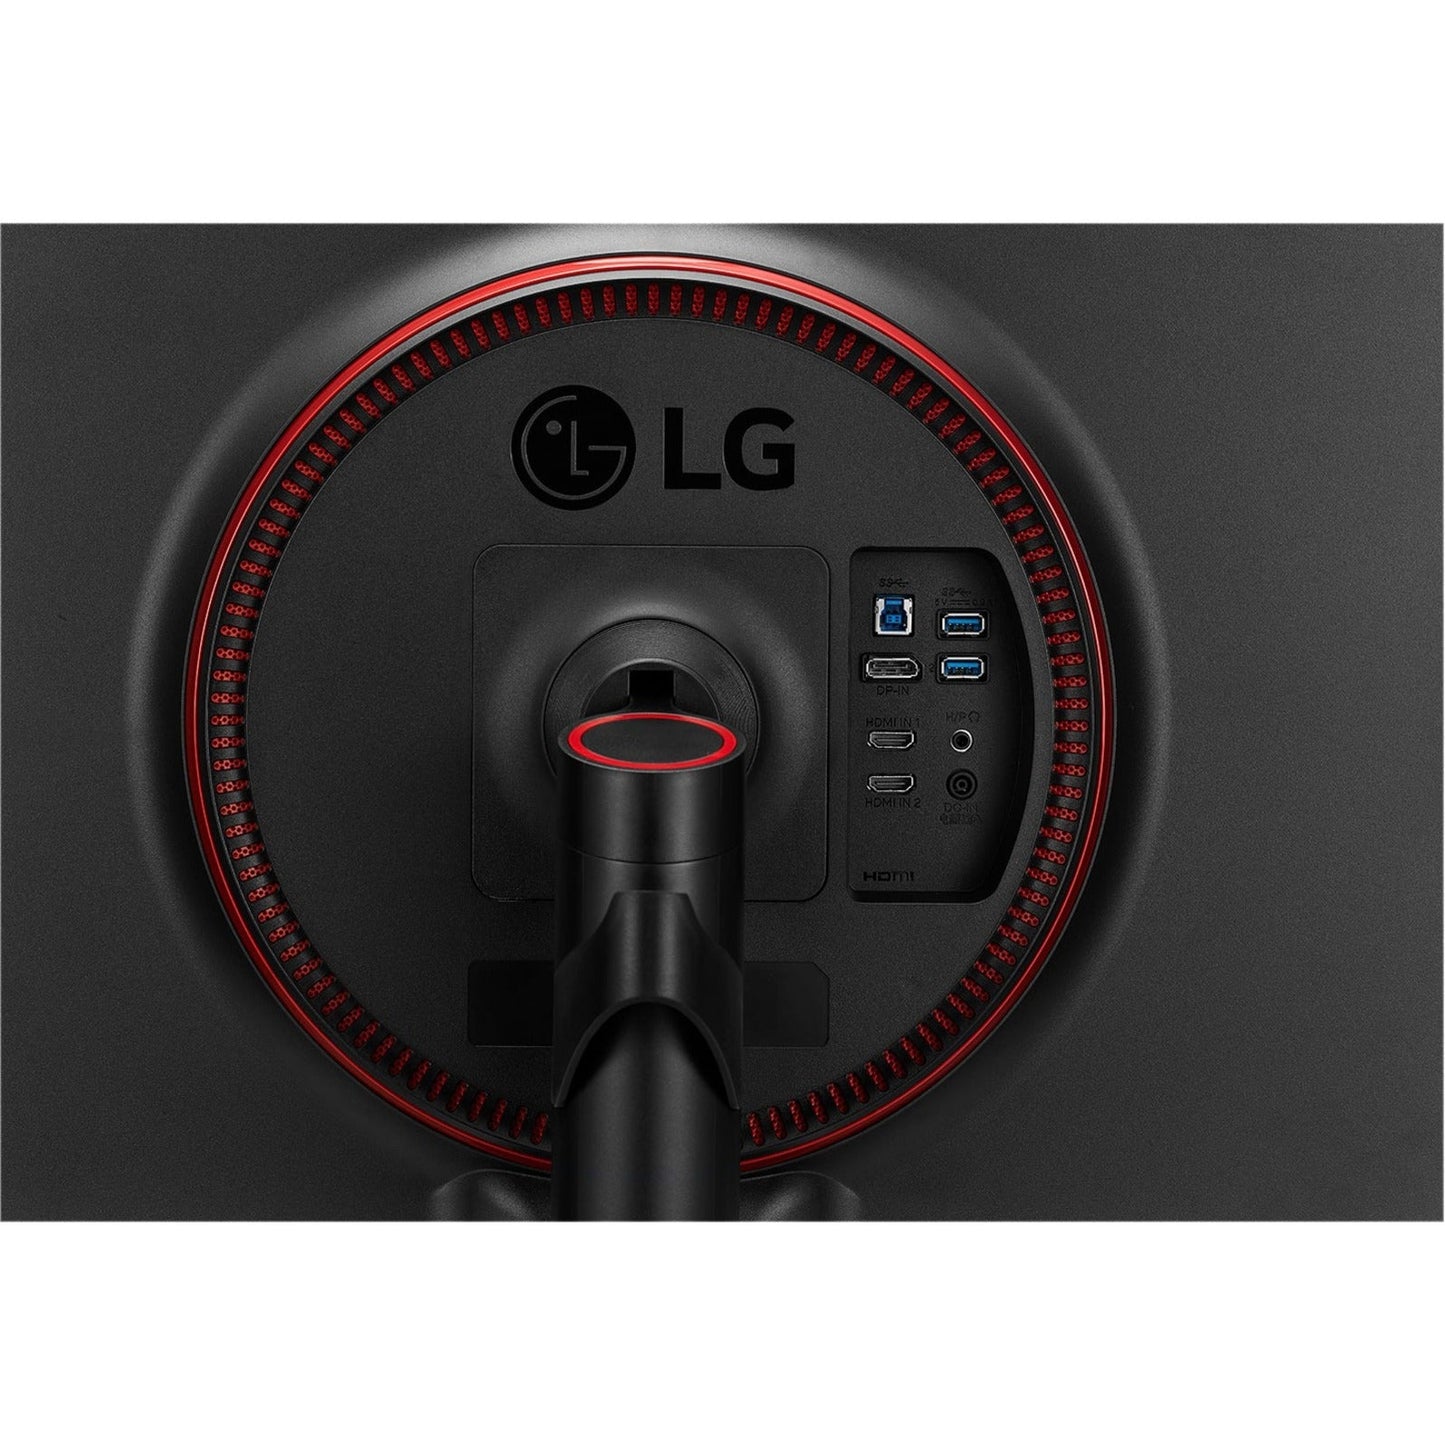 LG UltraGear 27GN75B-B 27" Full HD Gaming LCD Monitor - 16:9 - Black Red